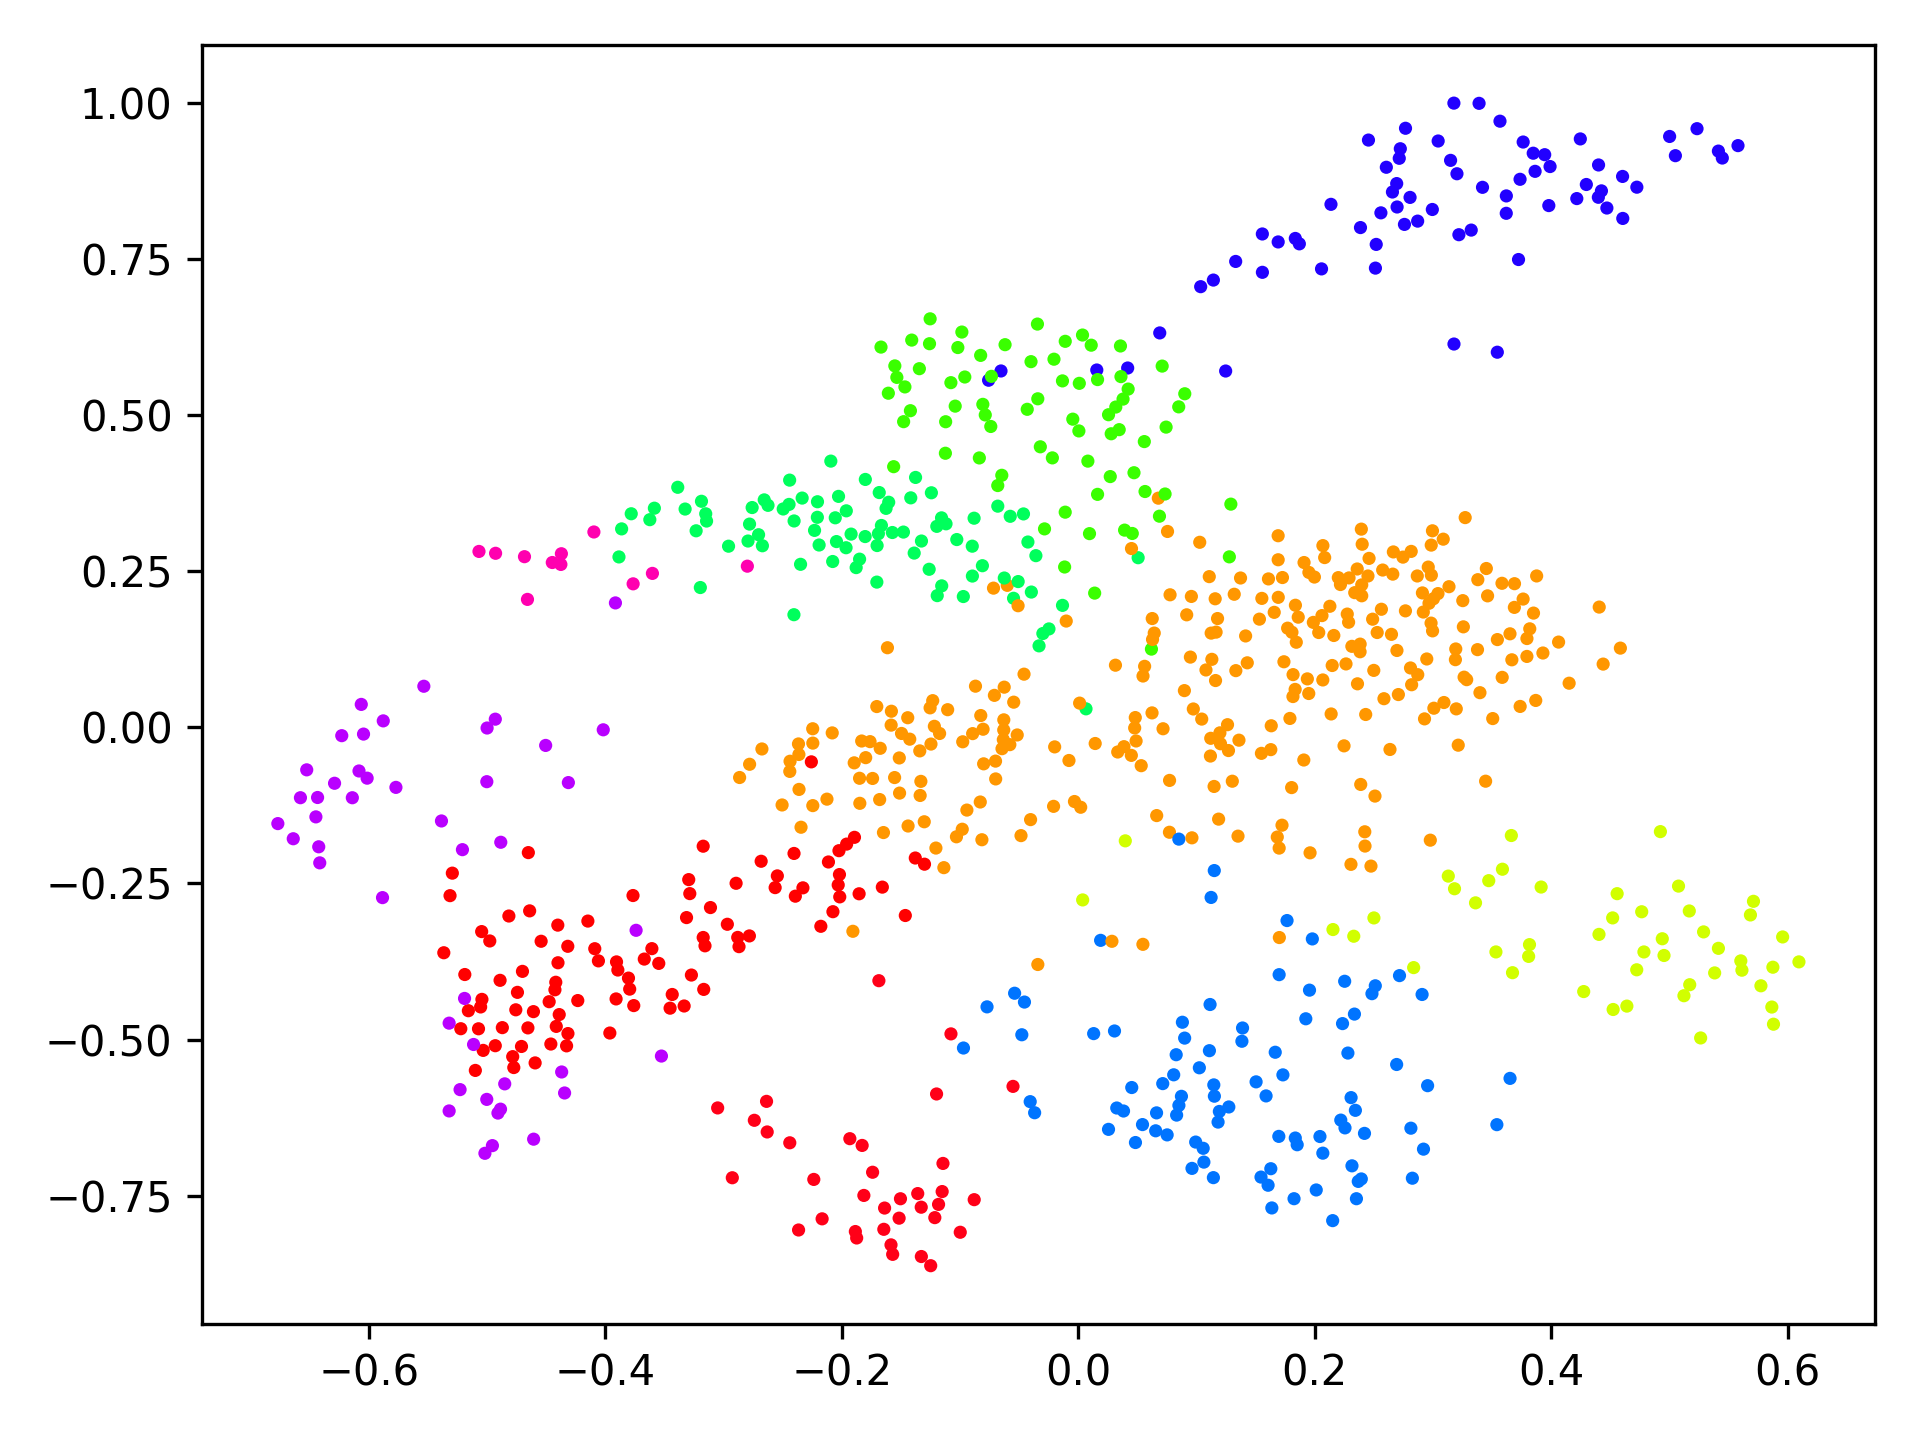 spectral clustering